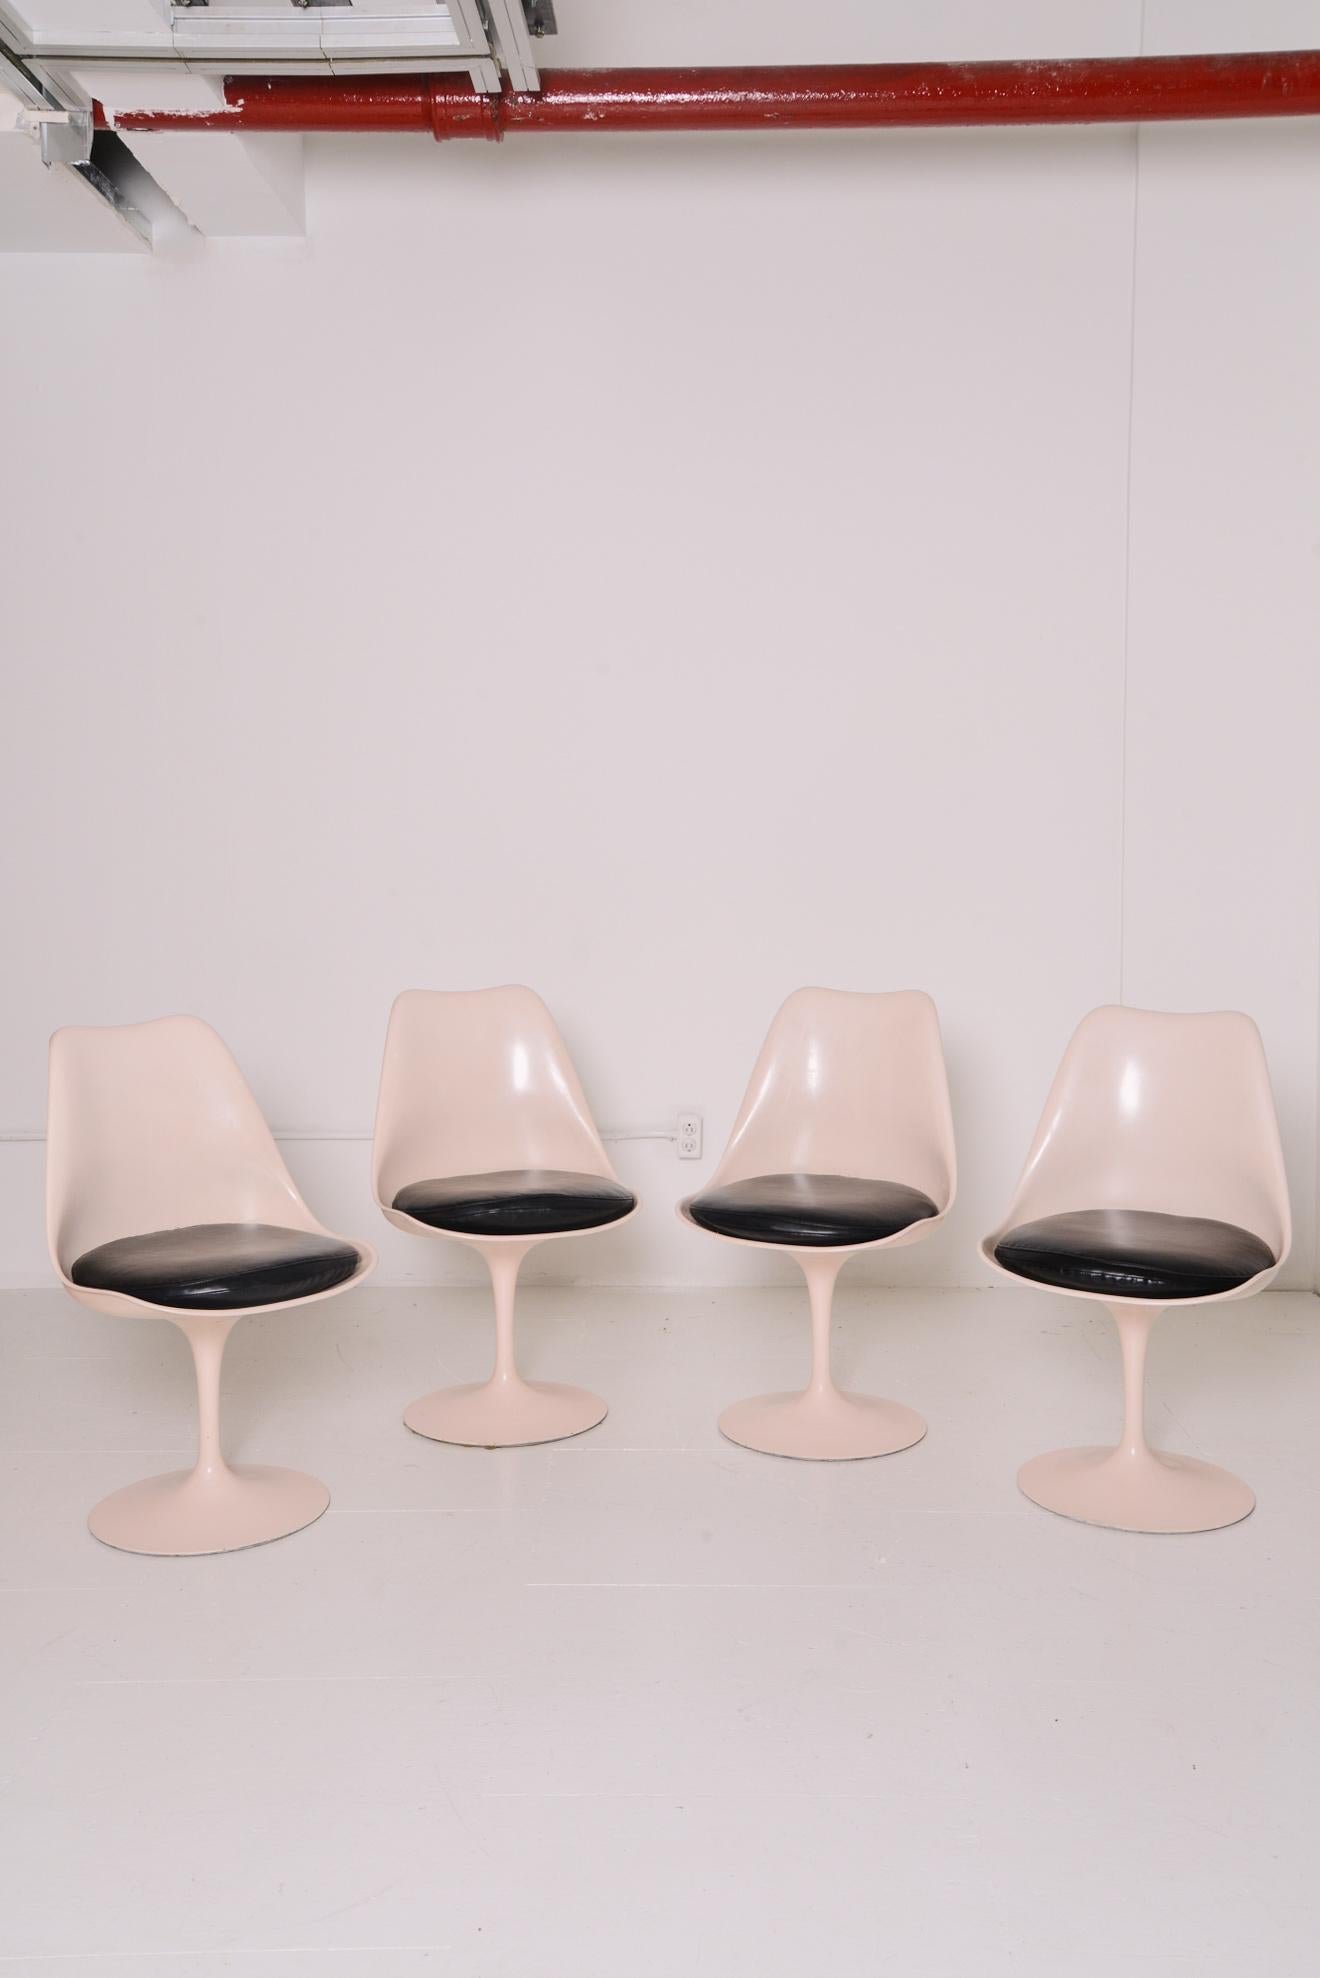 Aluminum Authentic Early Knoll Eero Saarinen Tulip Chairs in Black Leather Seat Cushion